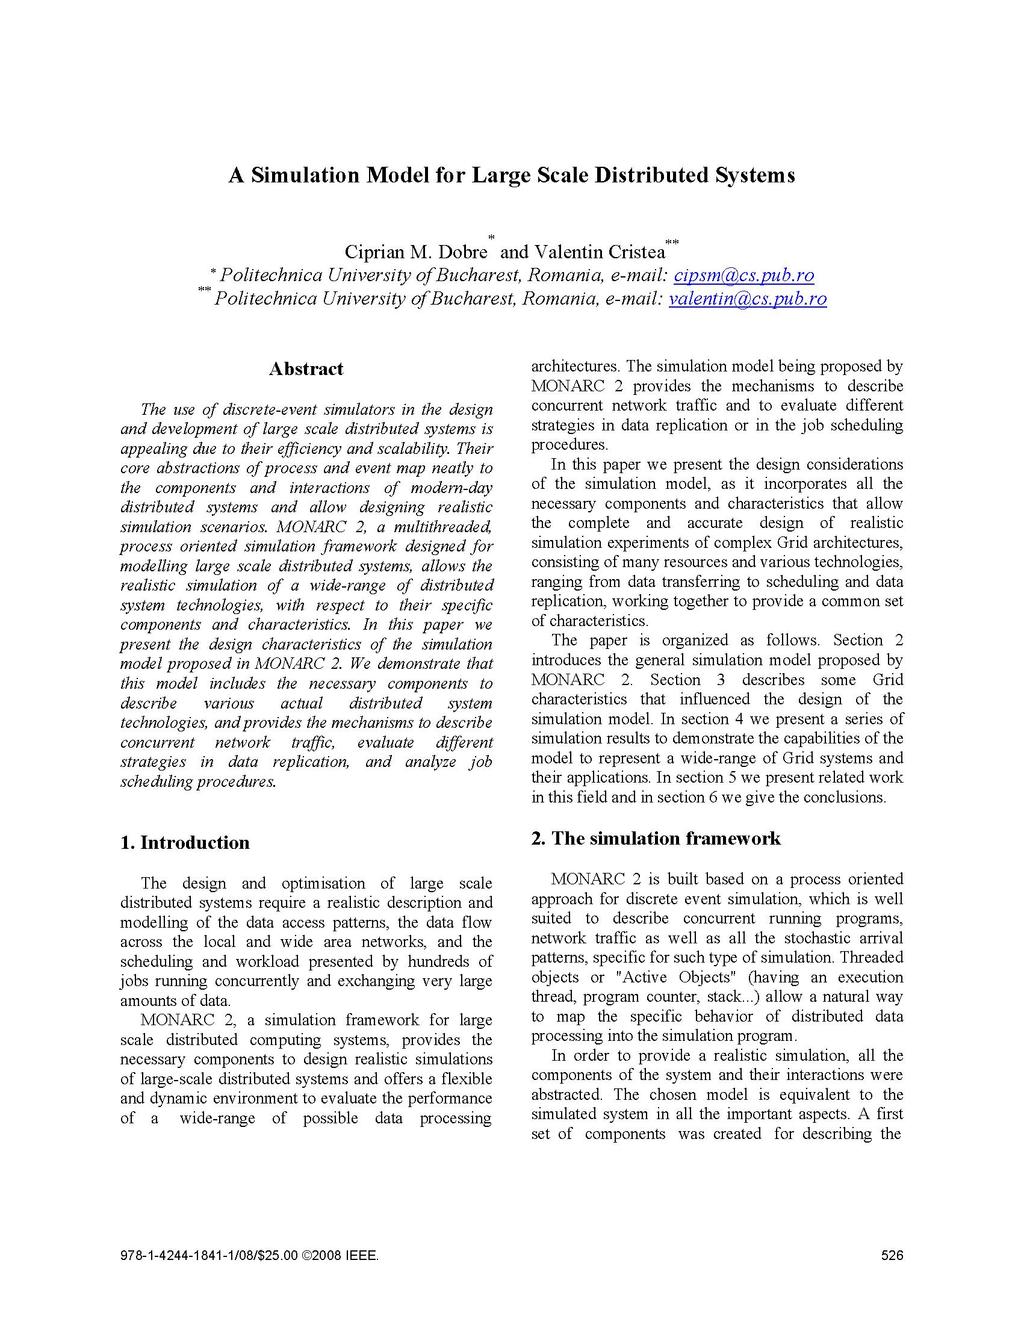 A Simulation Model for Large Scale Distributed Systems Ciprian M. Dobre and Valentin Cristea Politechnica University ofbucharest, Romania, e-mail.